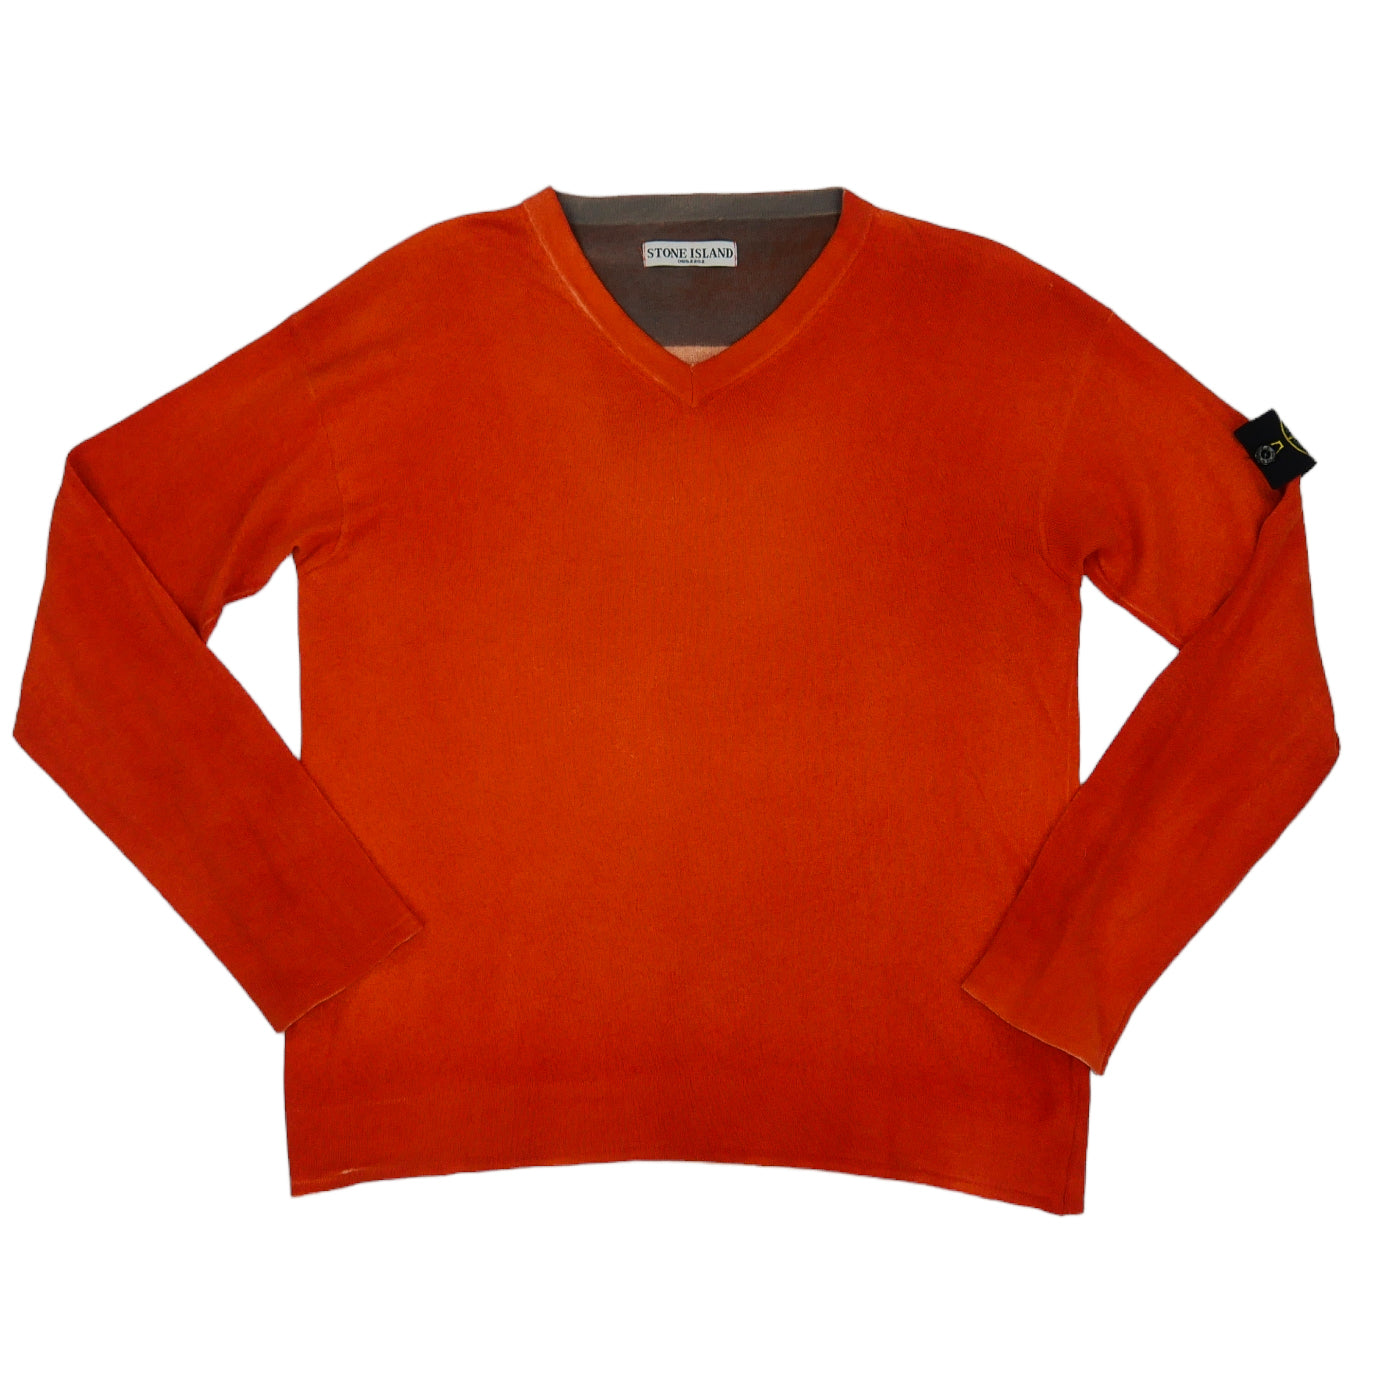 S/S 06 Stone Island Lightweight Knitted Sweater